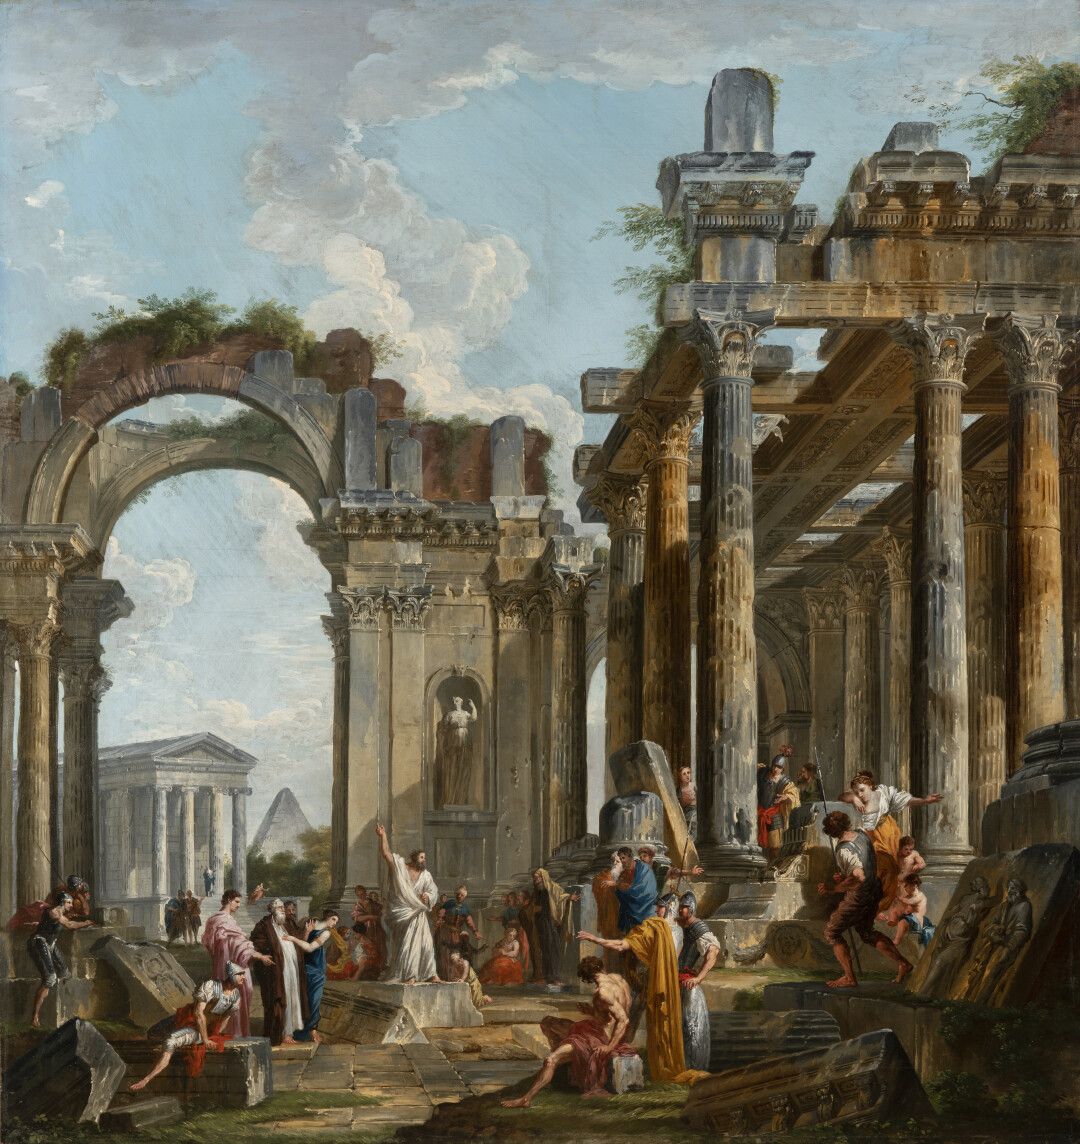 Sermon of an apostle in the Roman ruins